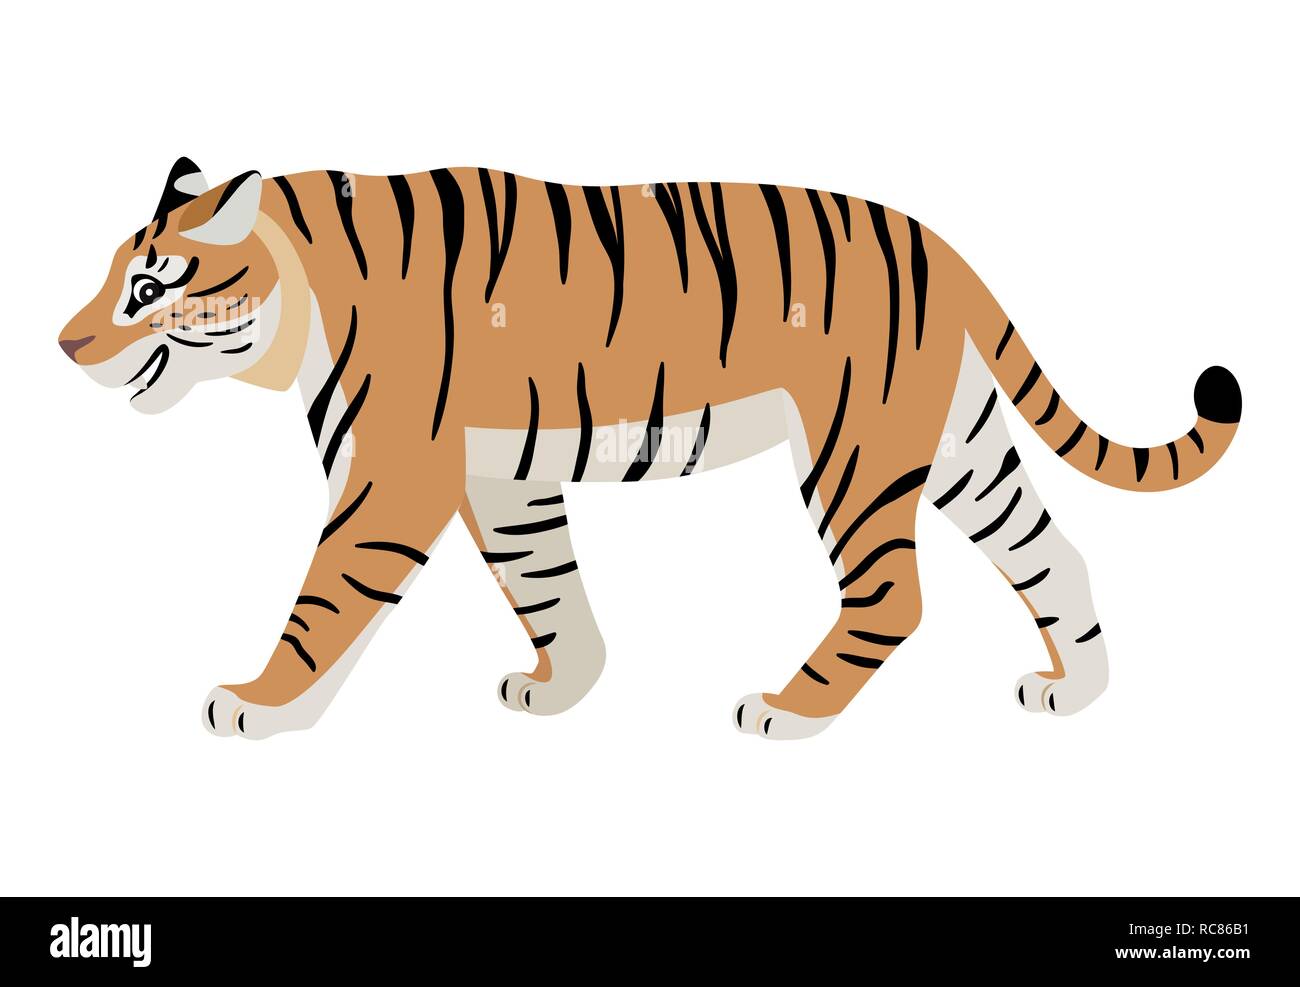 Friendly predatory animal, cute walking tiger icon Stock Vector